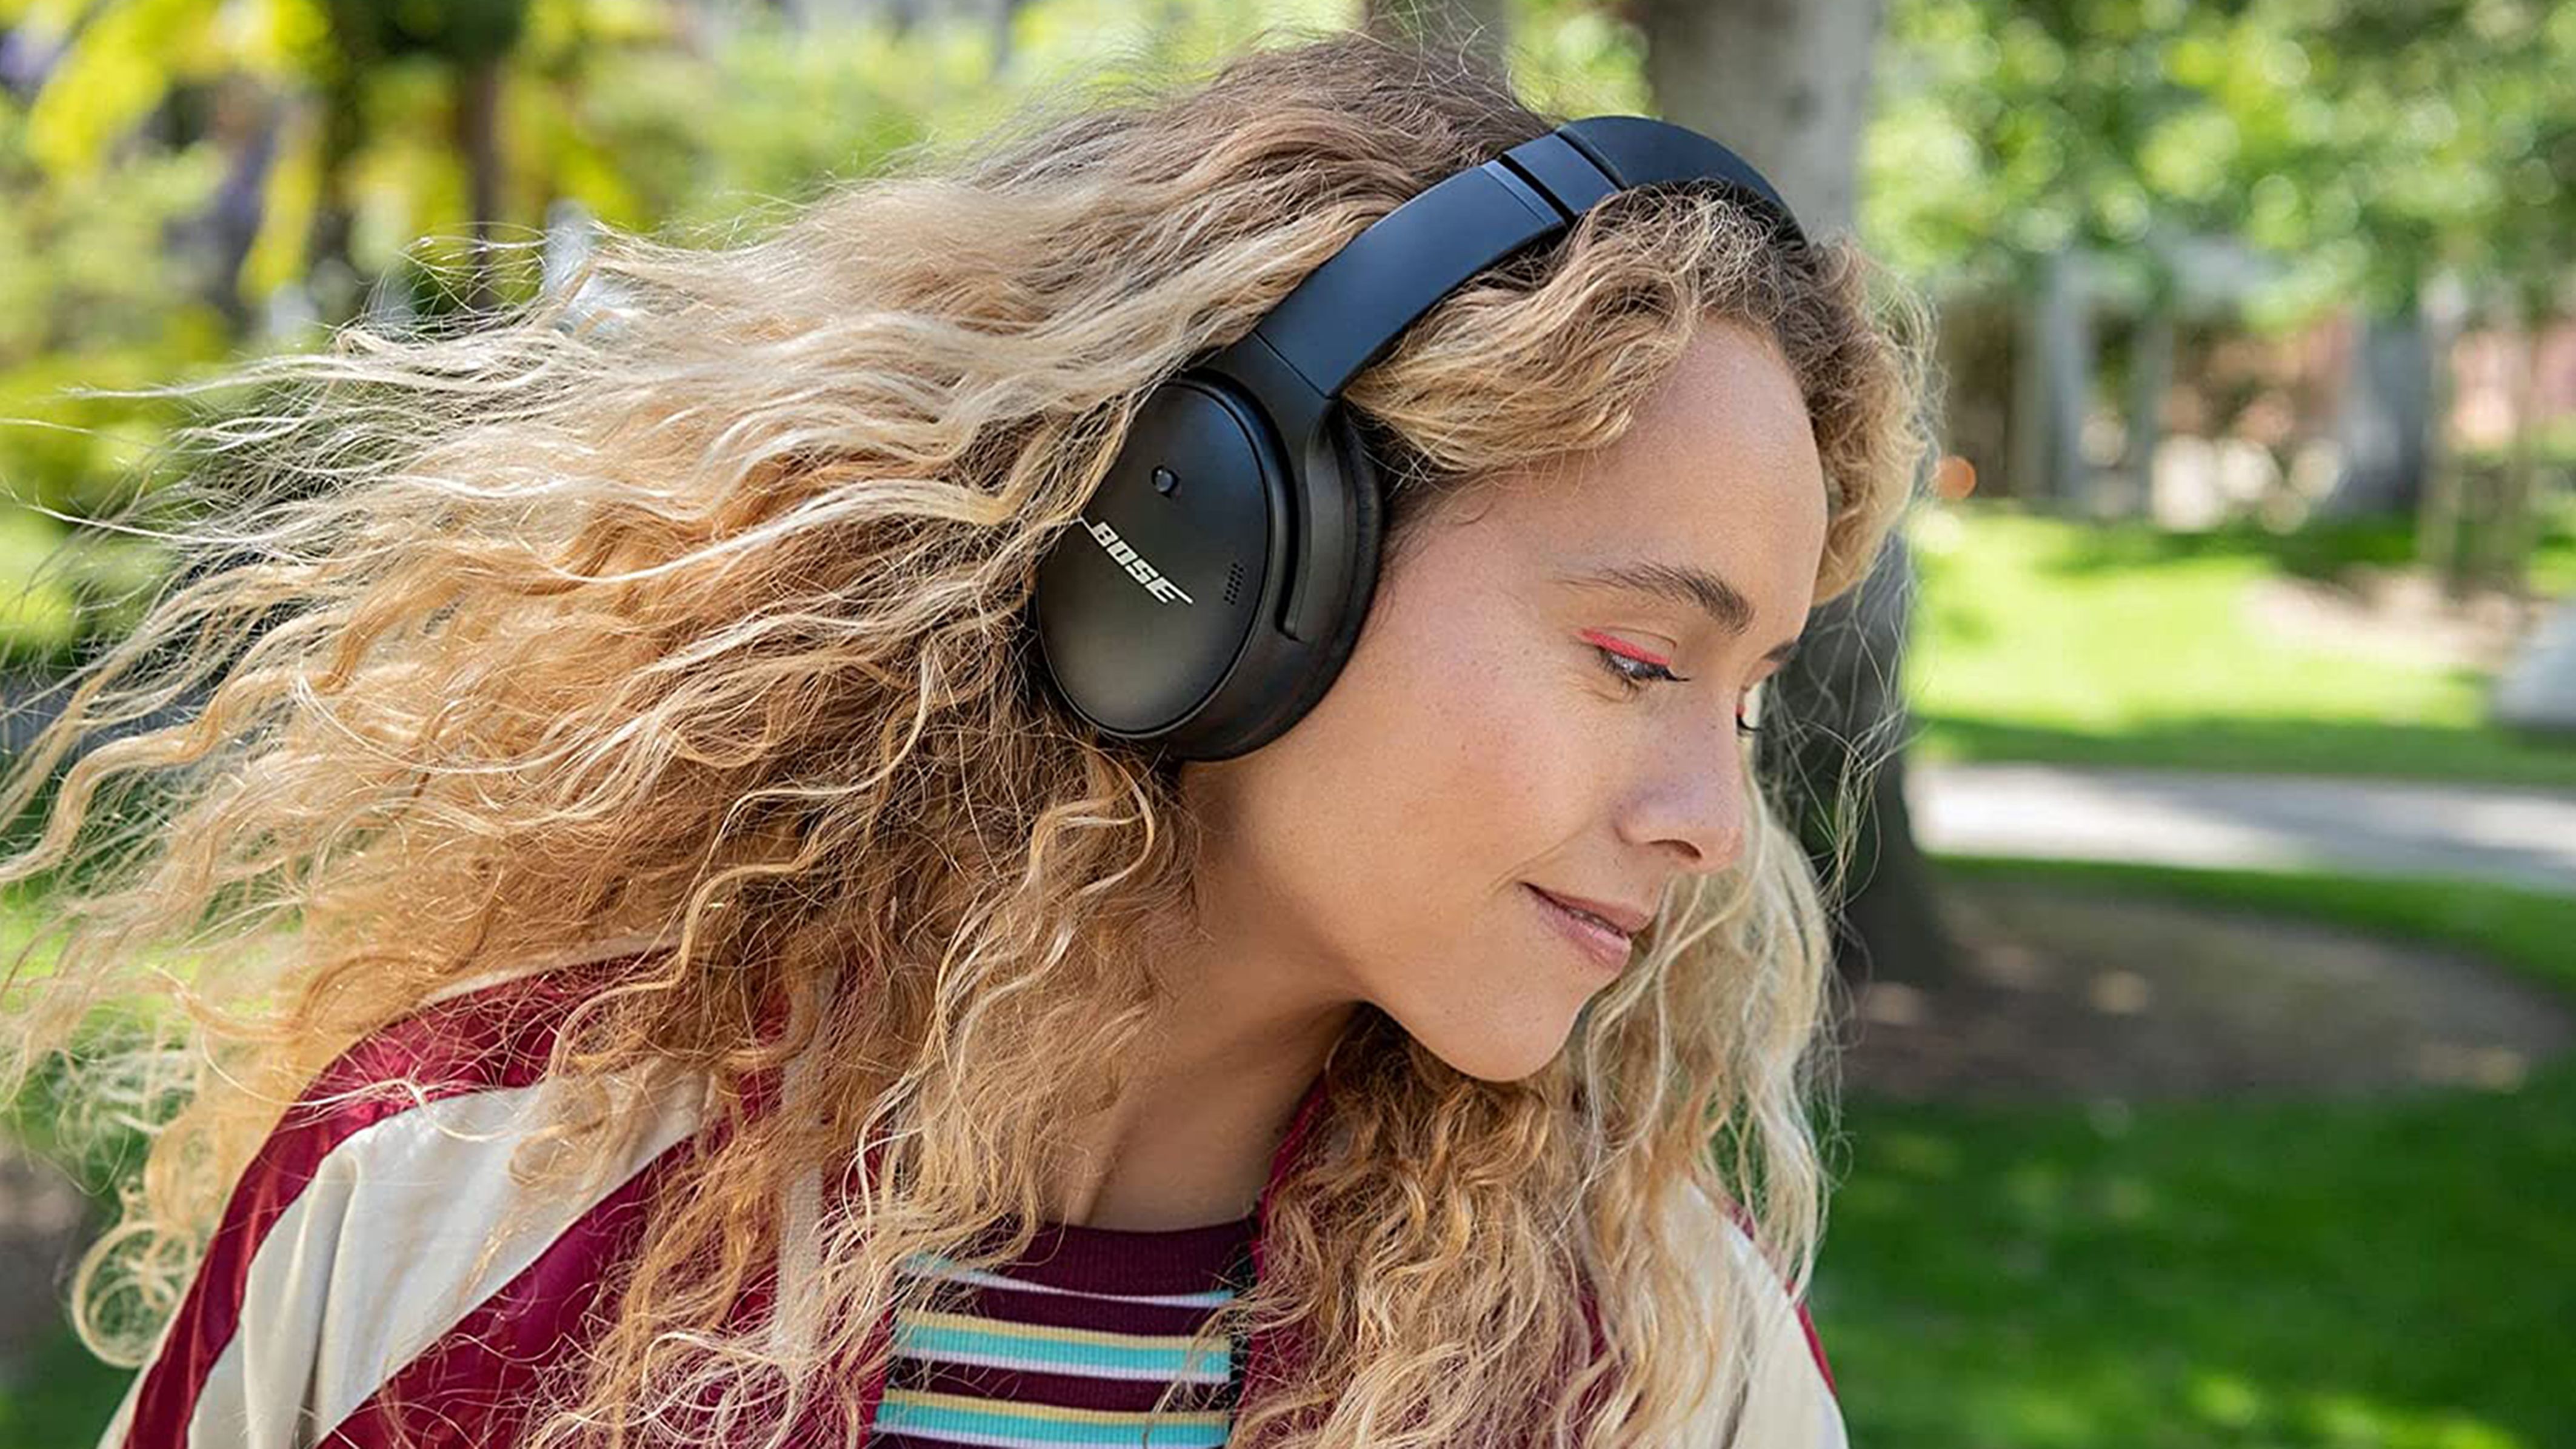 Bose QuietComfort QC 45 Wireless Noise Cancelling Headphones - Black -  BRAND NEW